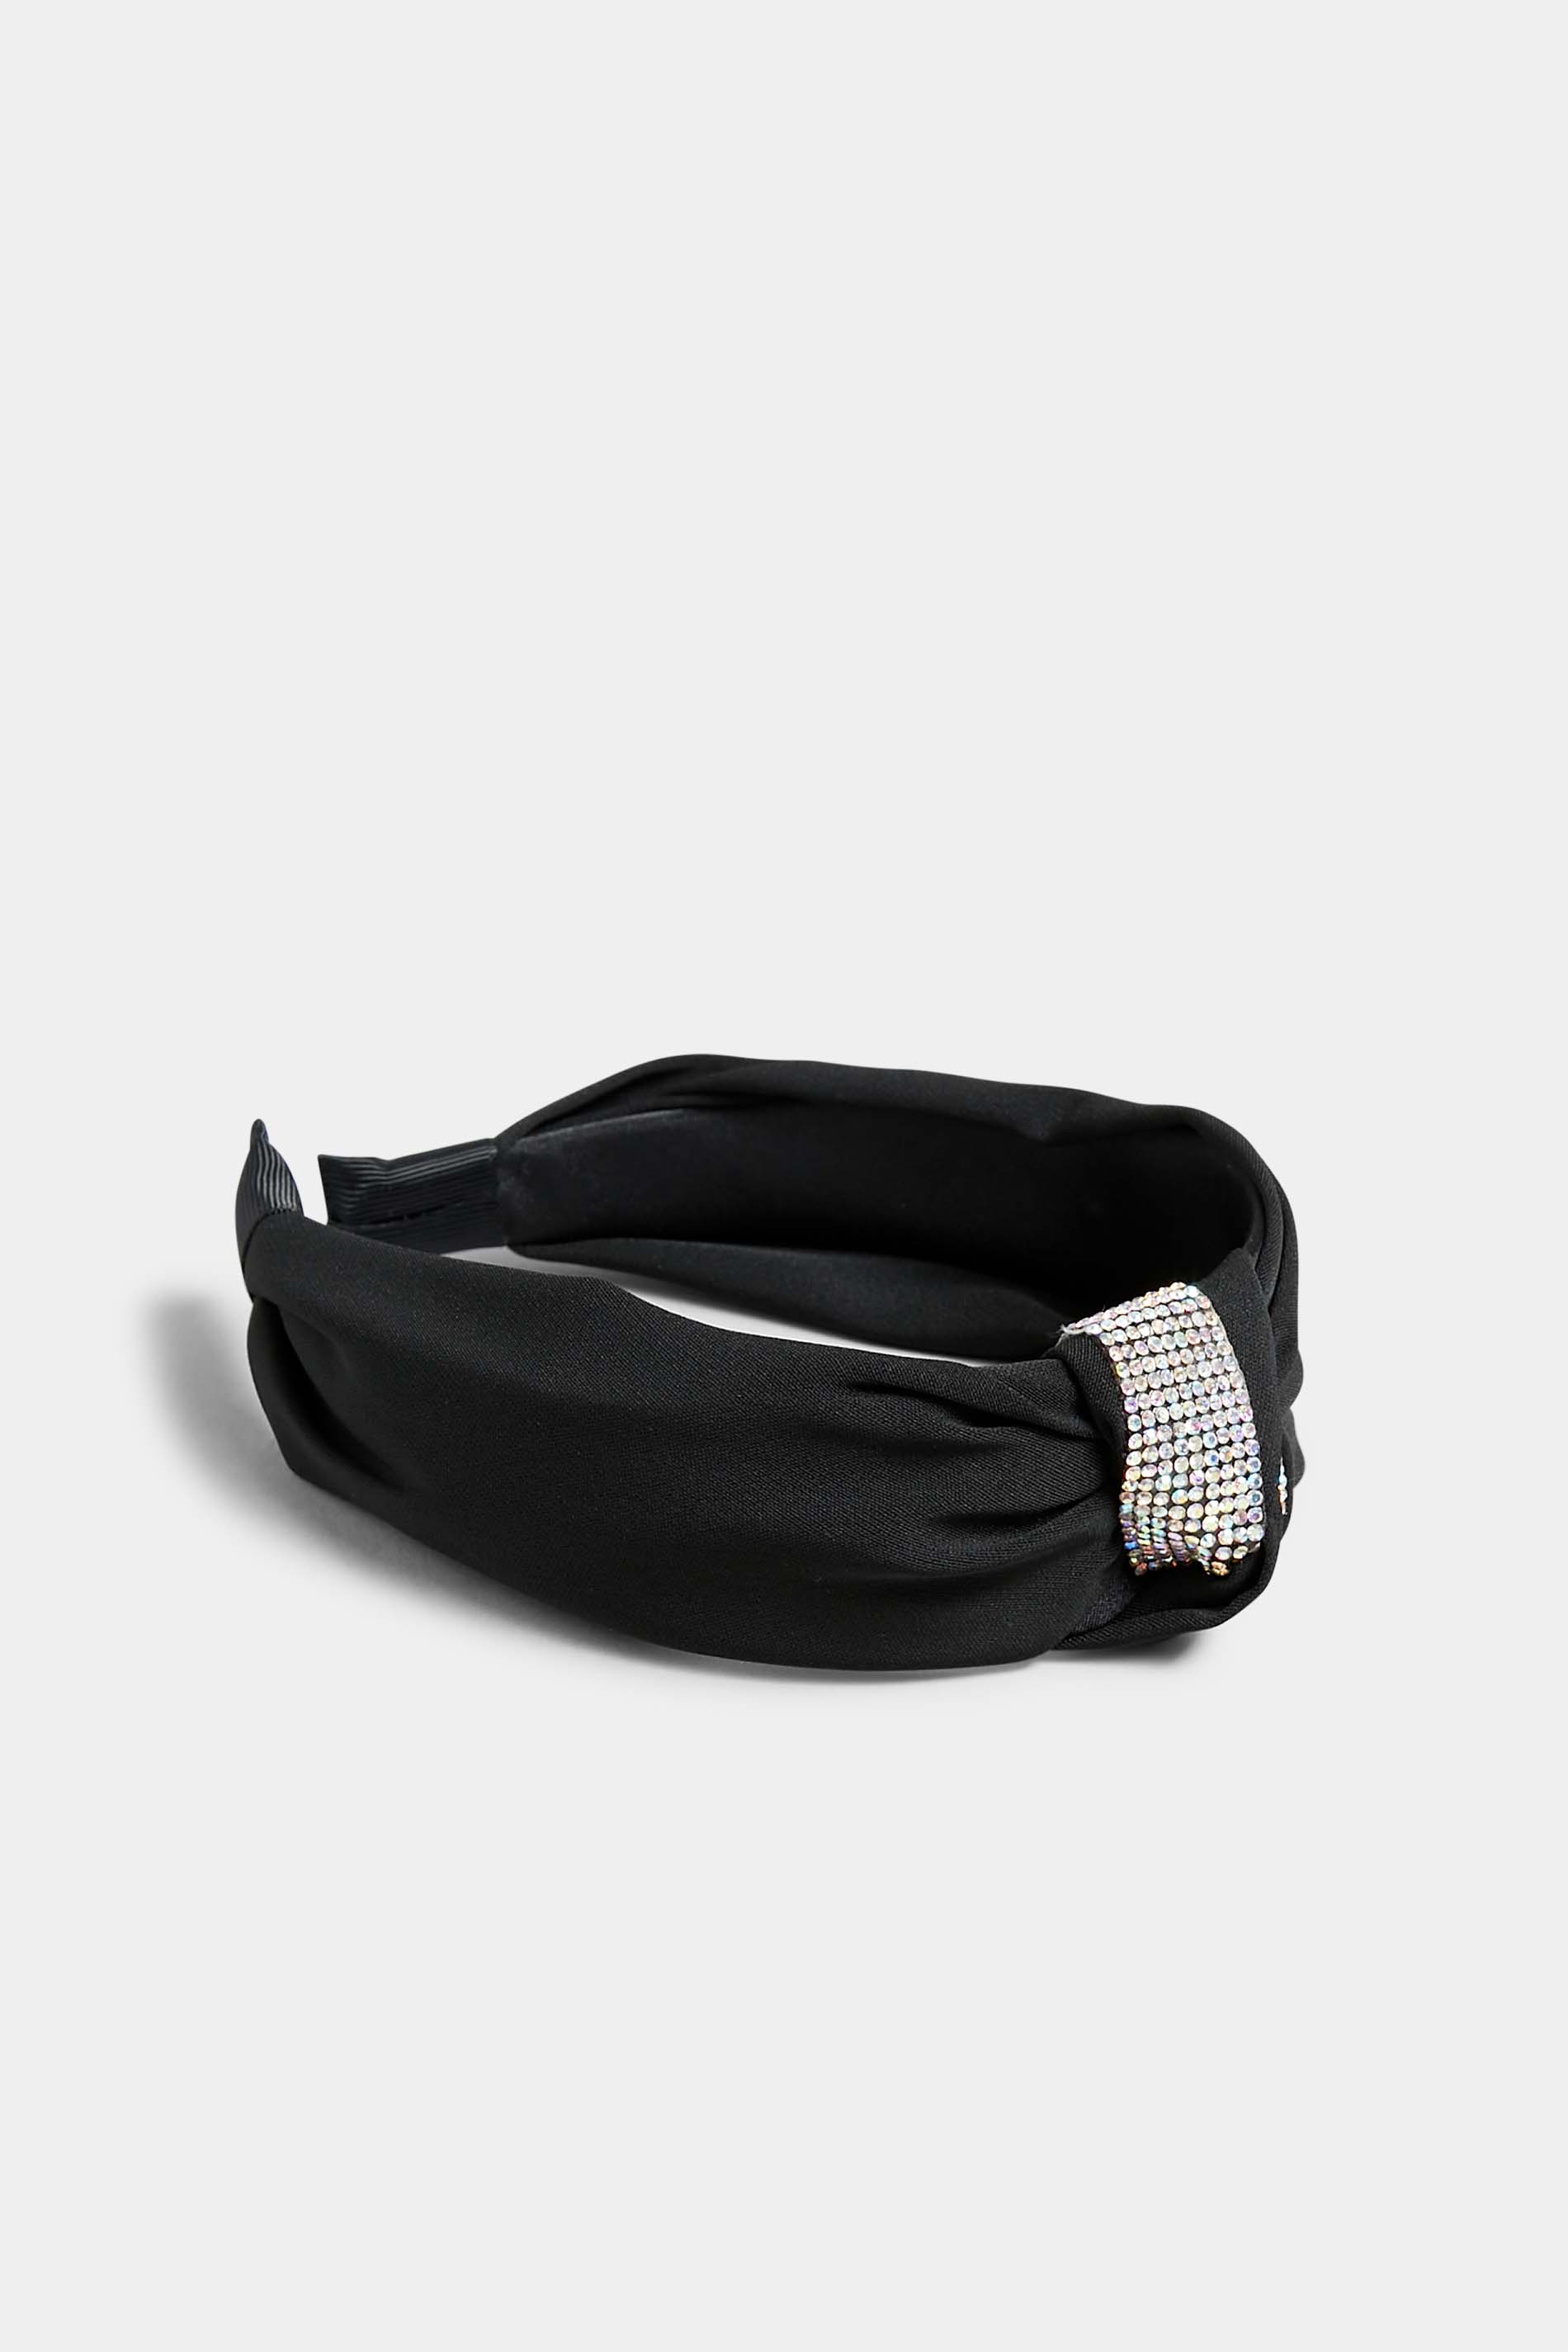 Black & Silver Diamante Knot Headband | Yours Clothing  3